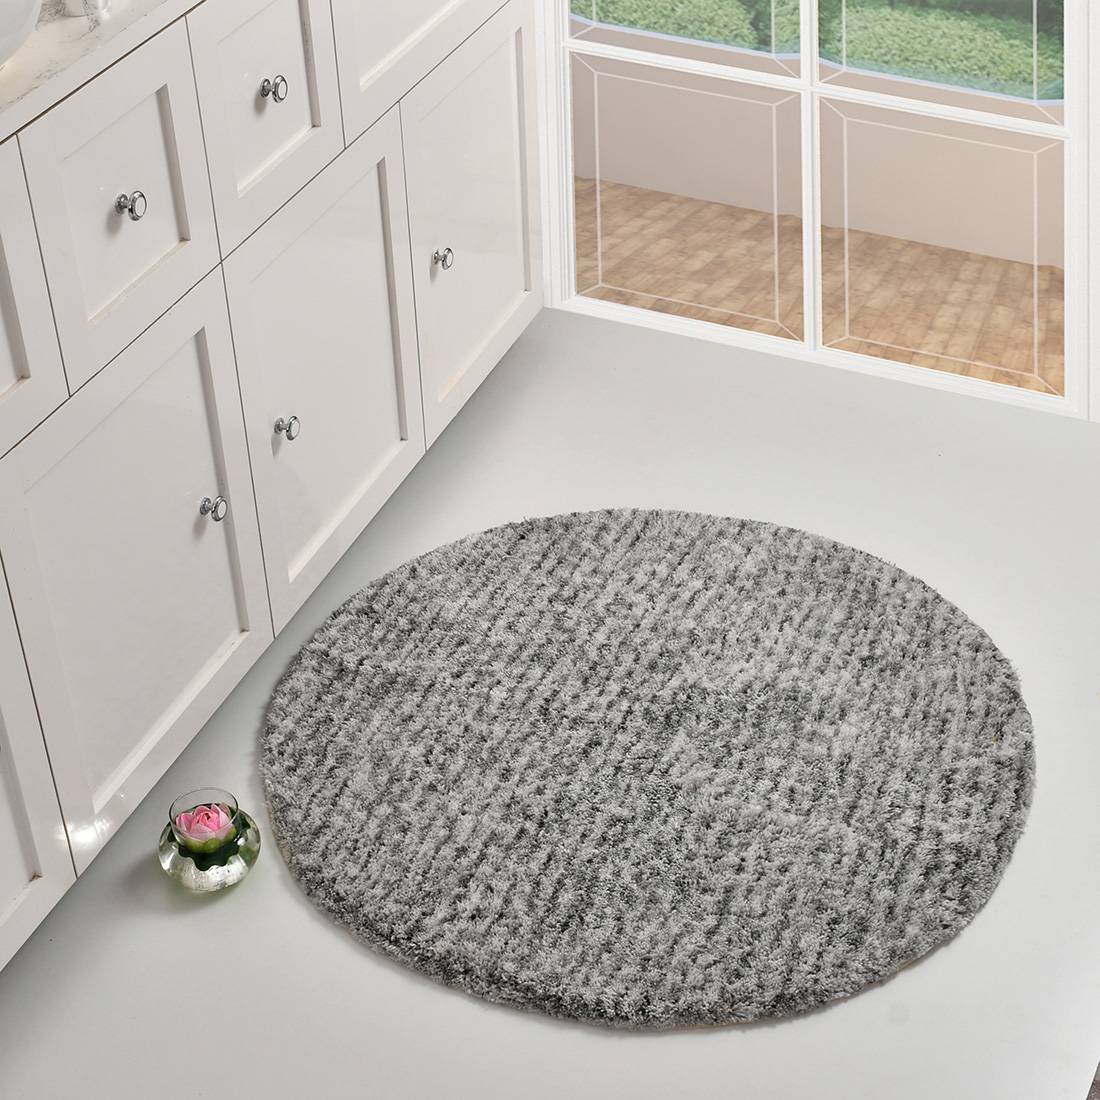 DOITOOL Bathmat 3 in 1 Blue Plank Pattern Bathroom Mat Set Antiskid Washroom Carpet Contour Mat Toilet Seat Lid Cover 